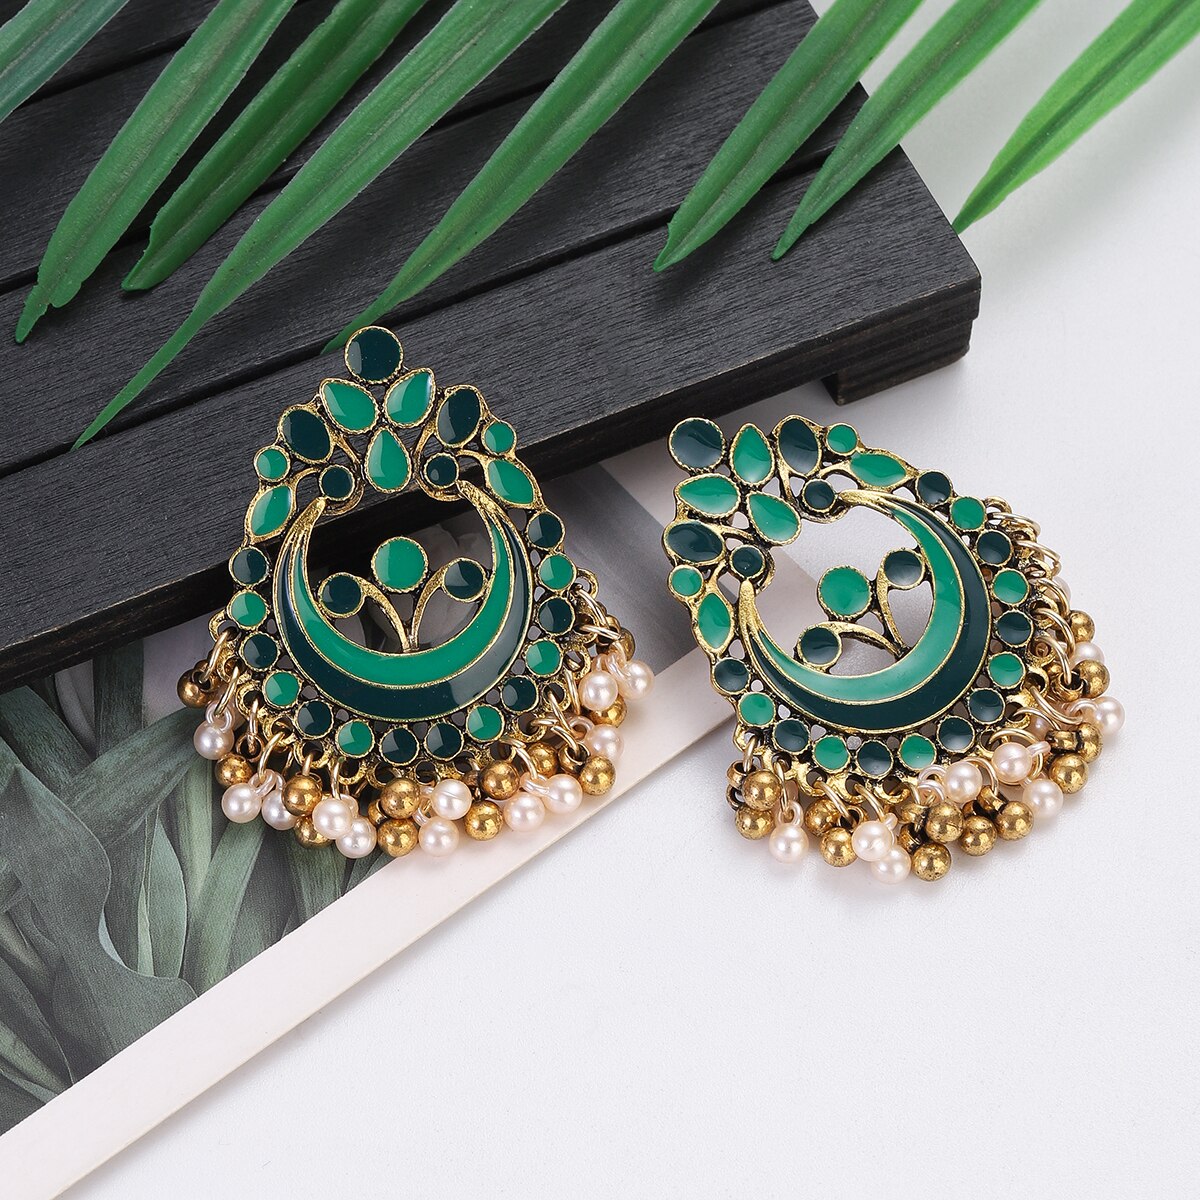 Ethnic-Women-Round-Flower-Dangle-Earrings-Jhumka-Indian-Earrings-Vintage-Fashion-Beads-Tassel-Jhumka-1005005133355004-9